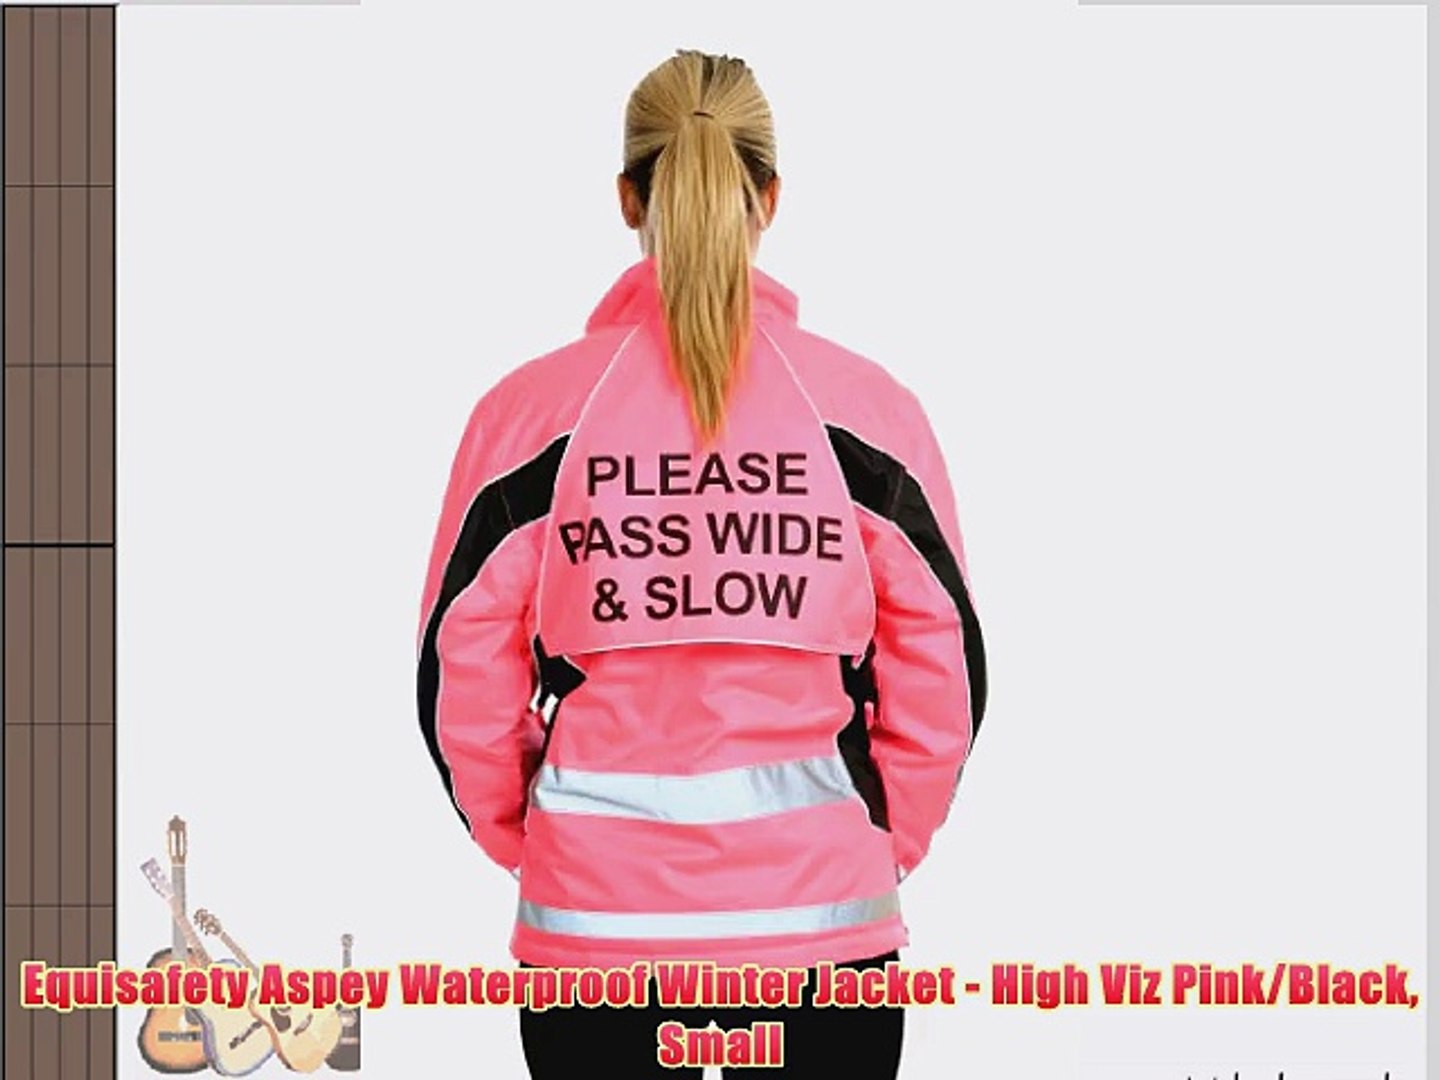 ⁣Equisafety Aspey Waterproof Winter Jacket - High Viz Pink/Black Small